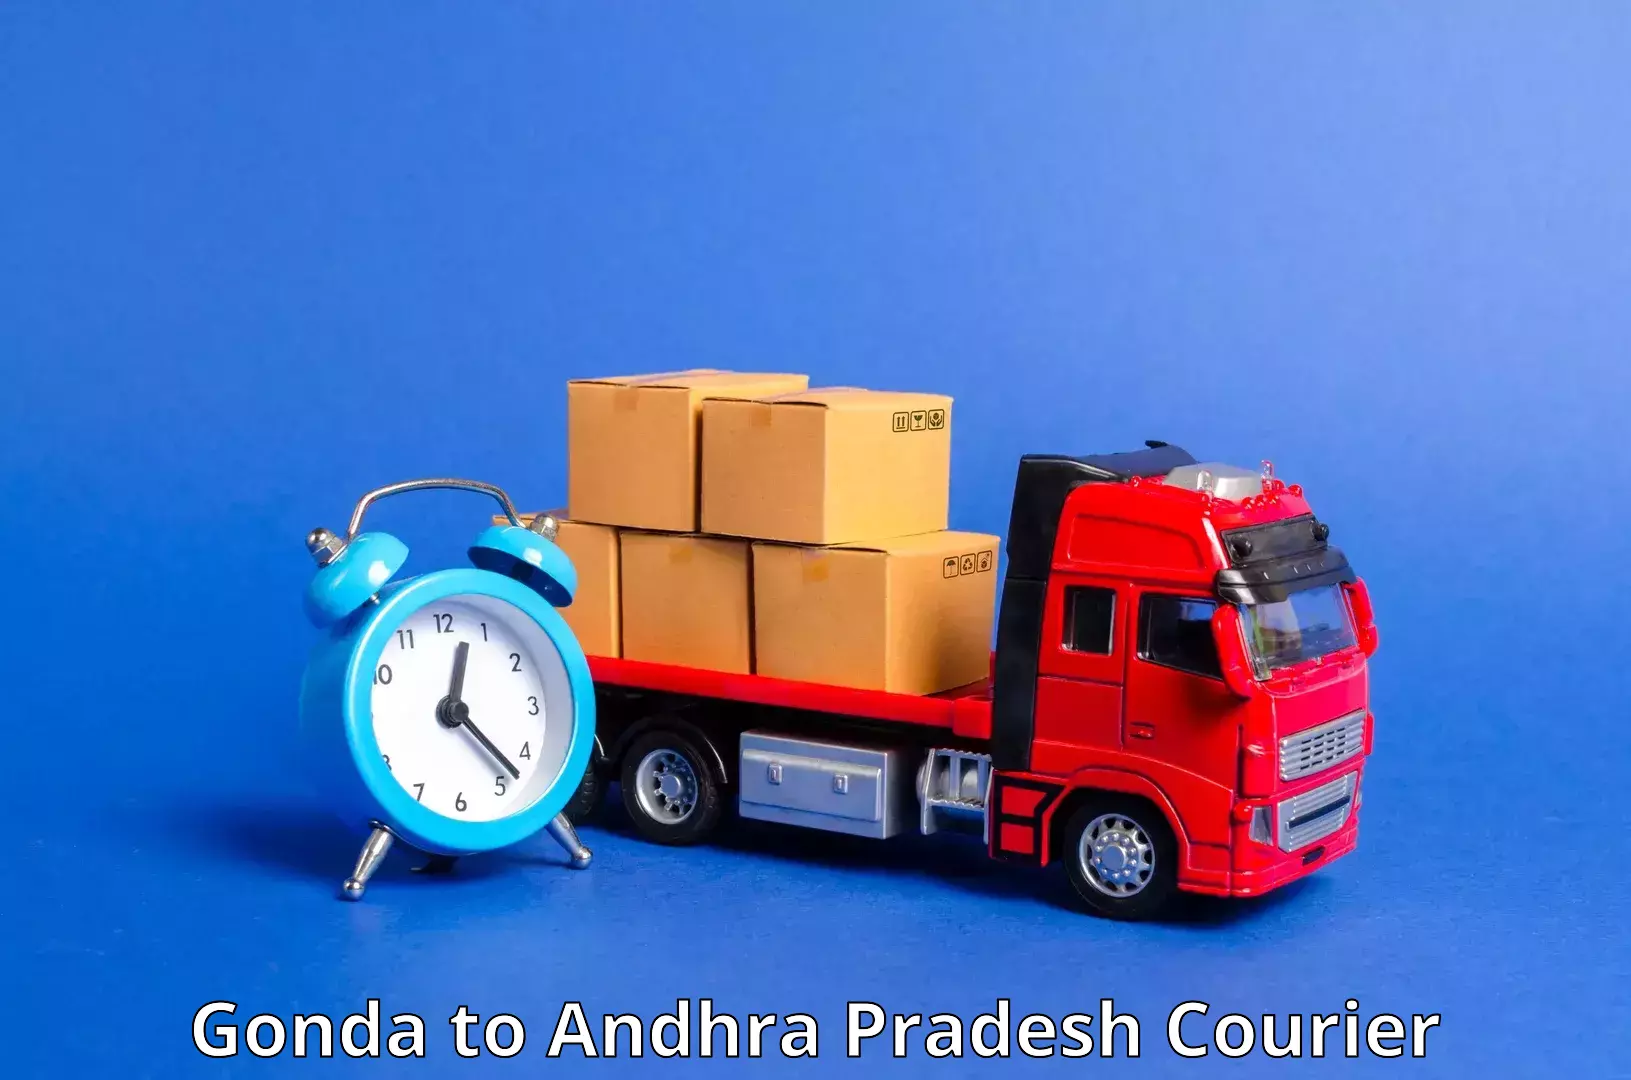 Express courier capabilities in Gonda to Amarapuram